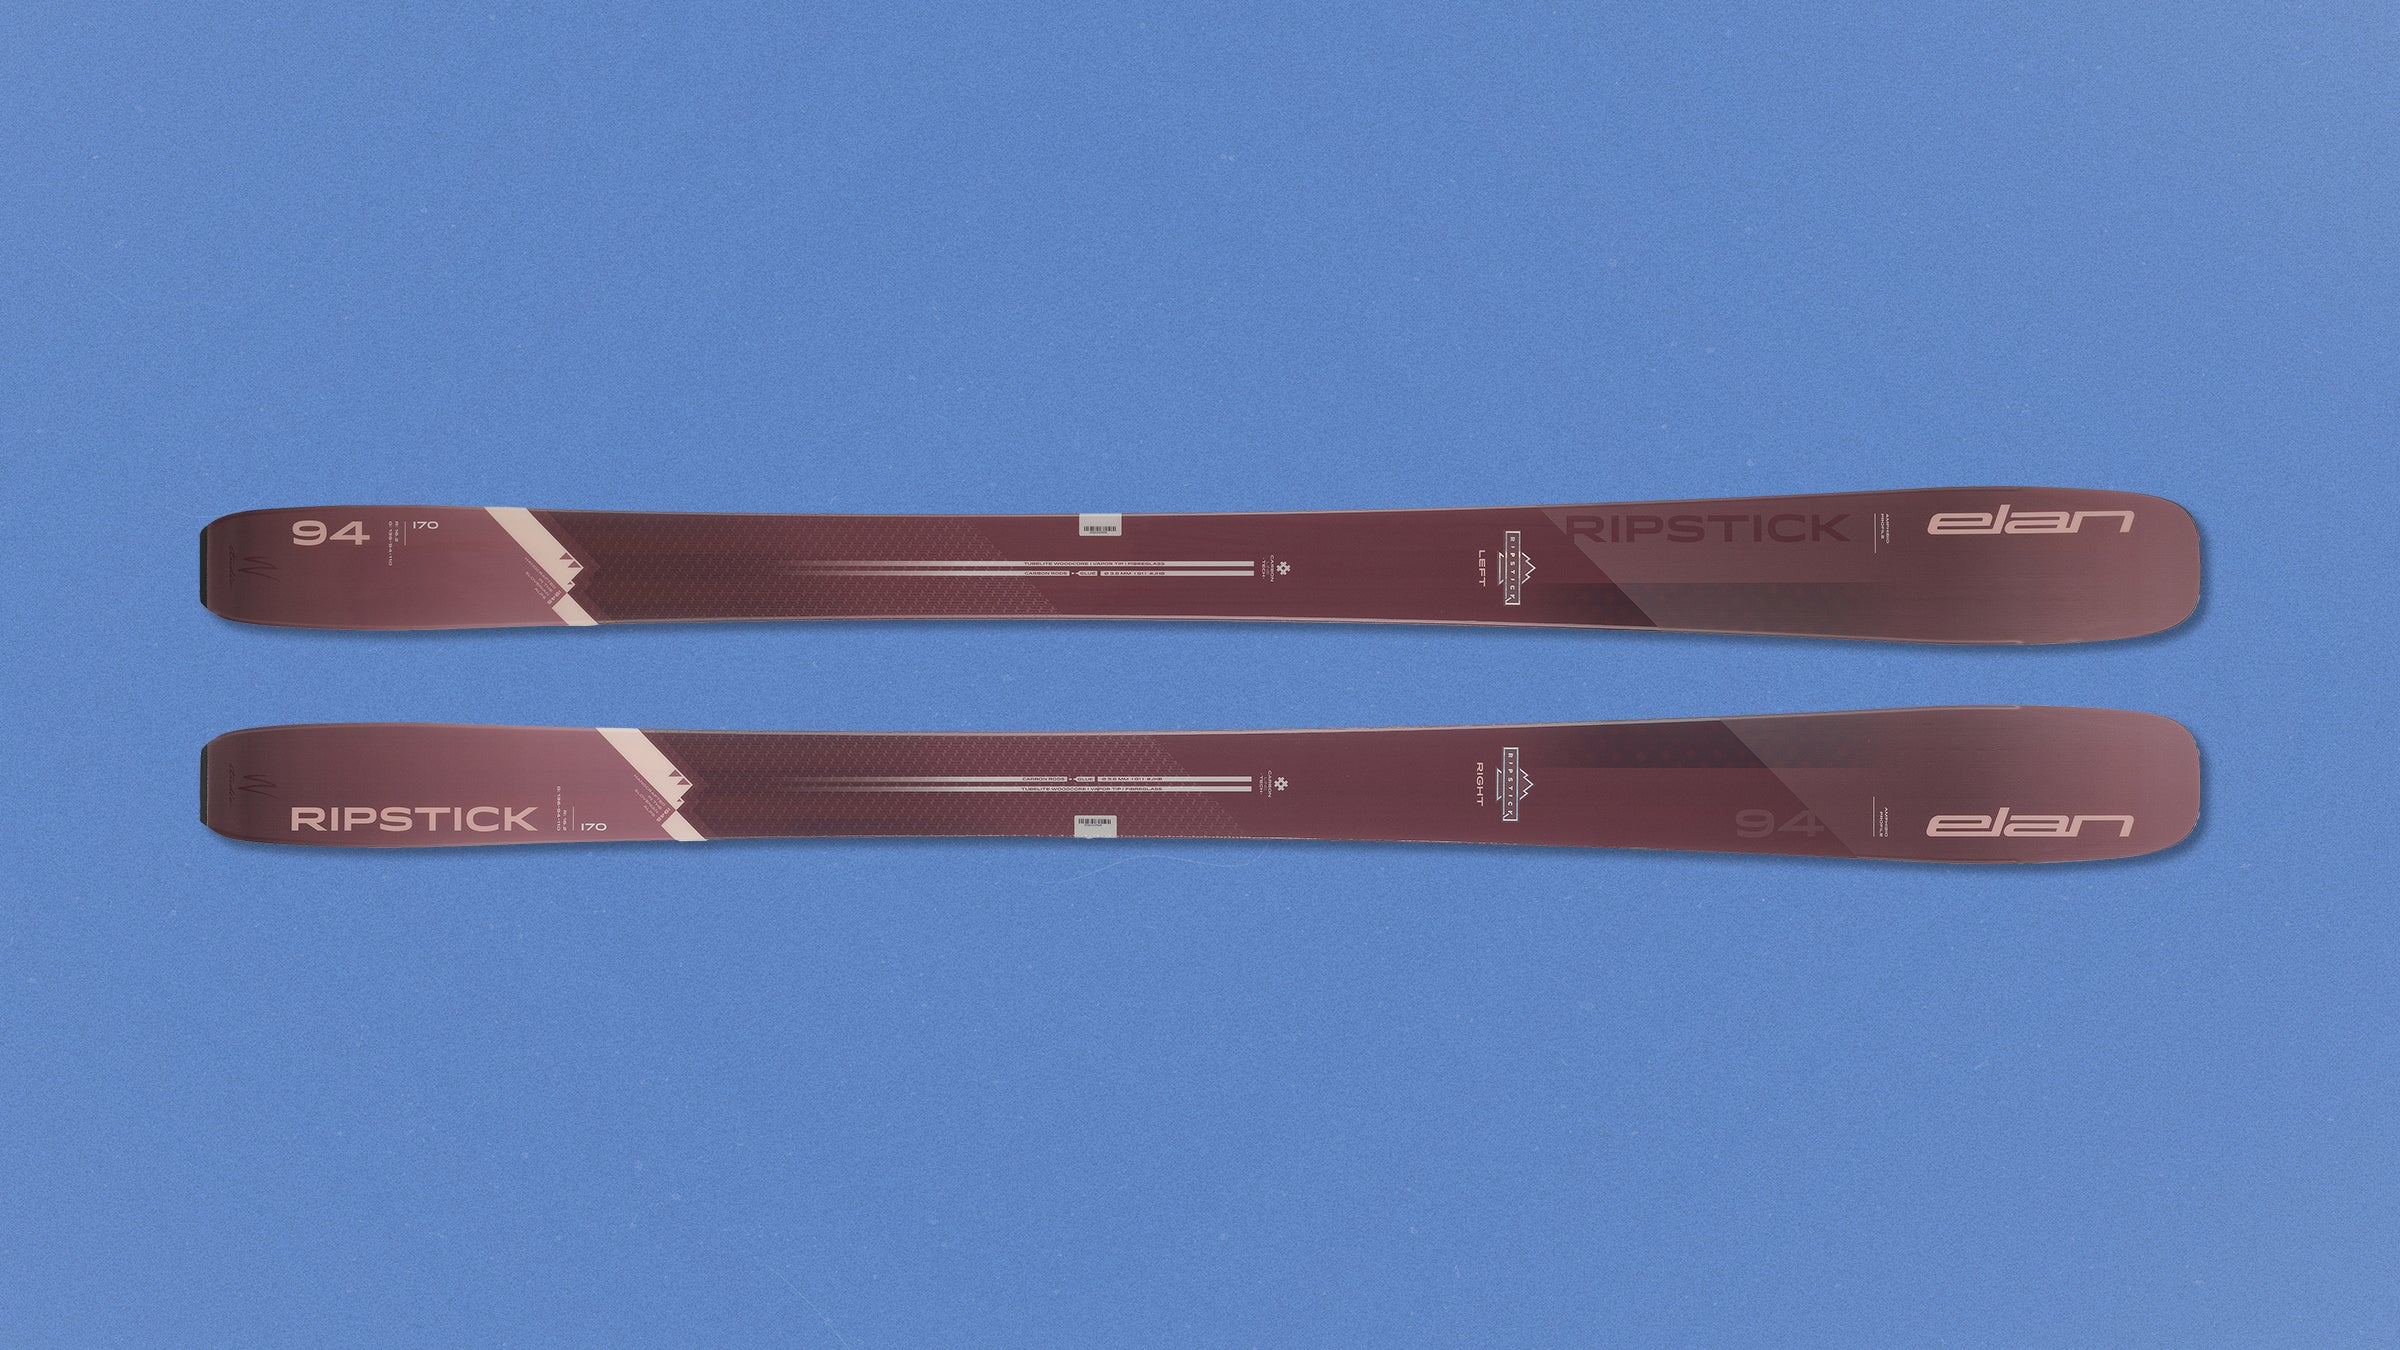 The Elan Ripstick Is the Do-It-All Women's Ski